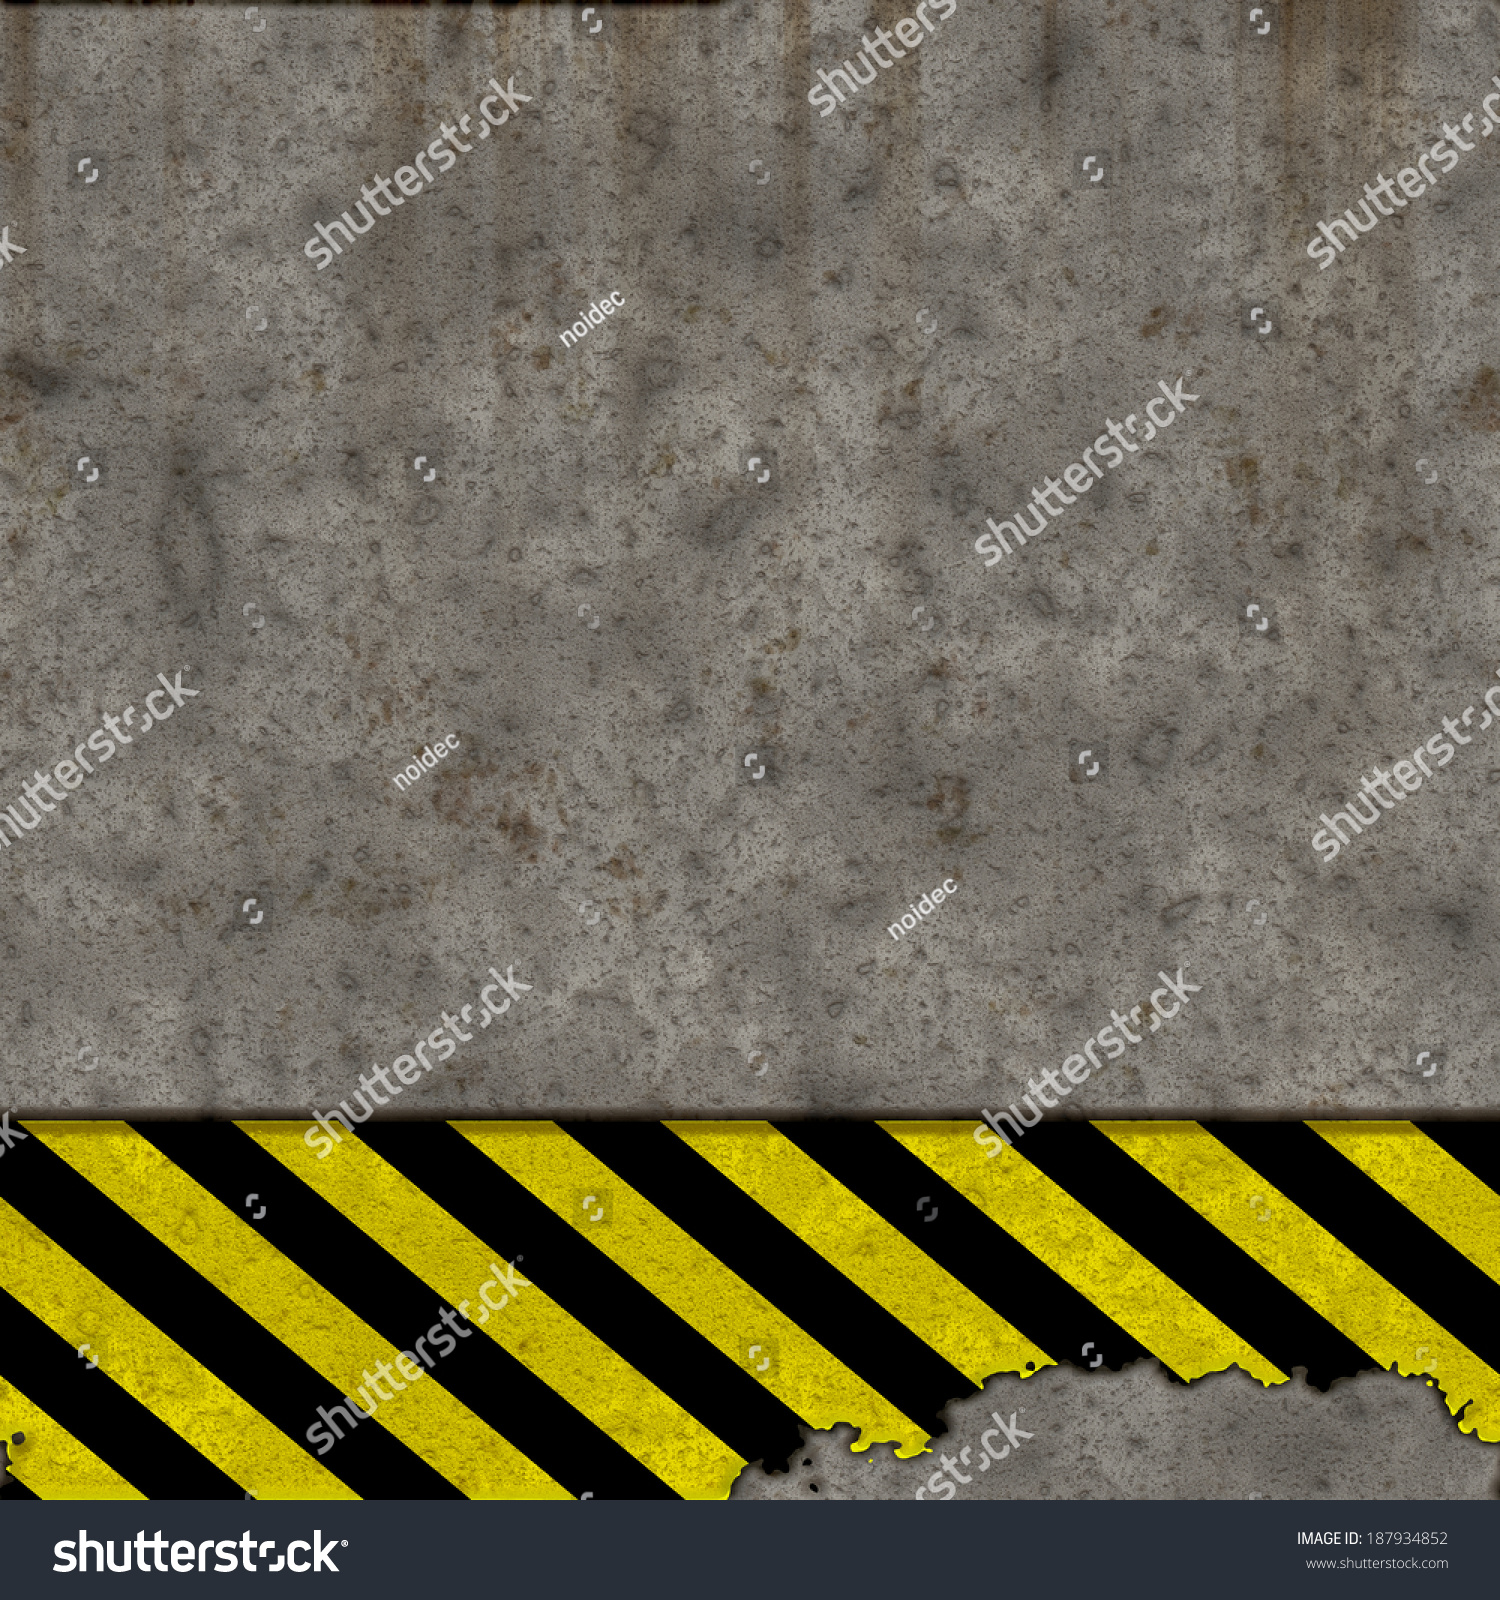 Grunge Concrete Wall Warning Safety Sign Stock Illustration ...